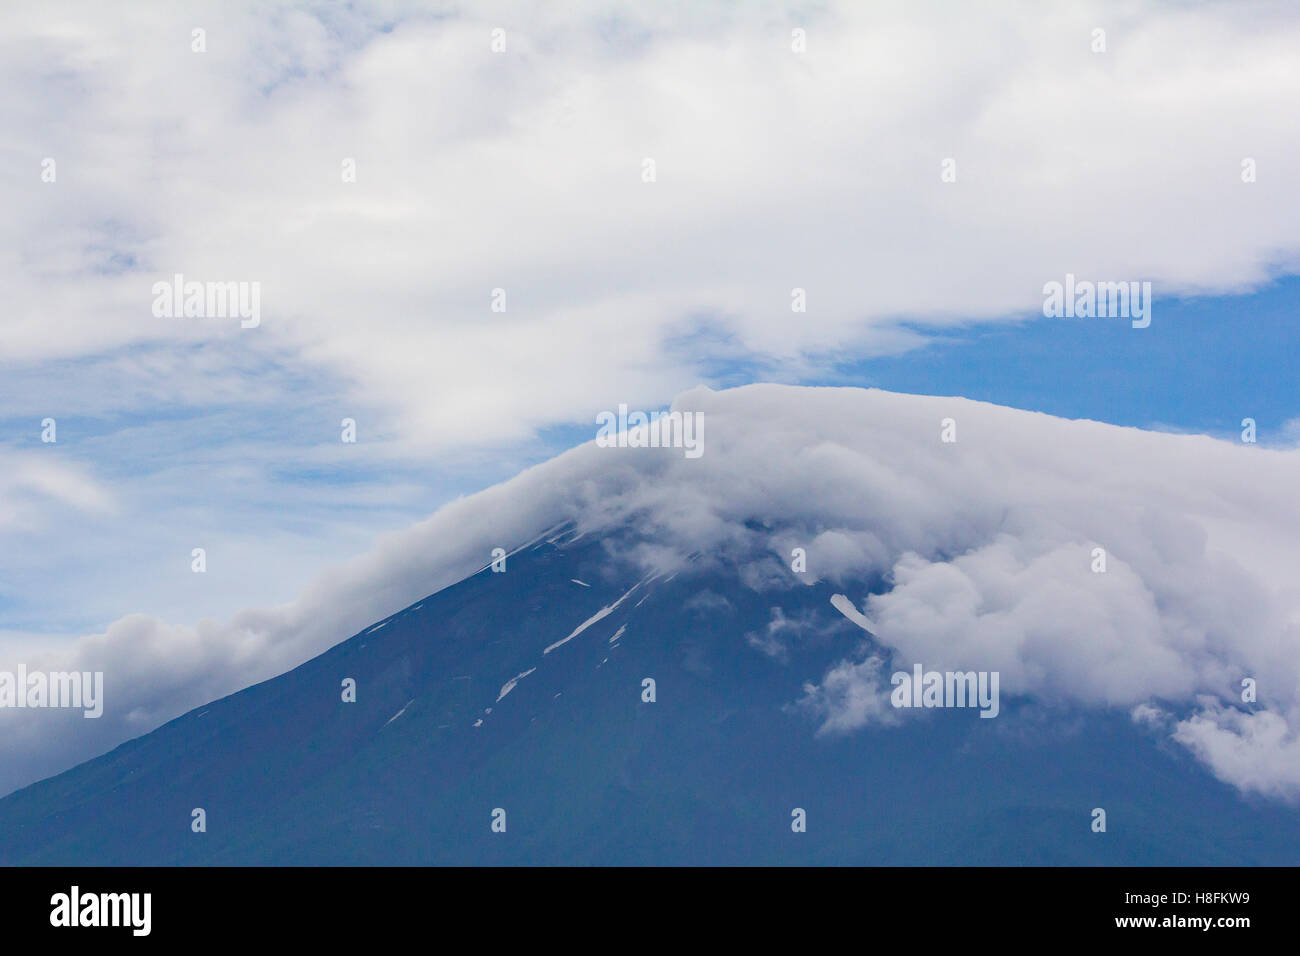 Kawaguchiko, Japan. View of the peak of Mt Fuji with clouds rolling across it. Stock Photo